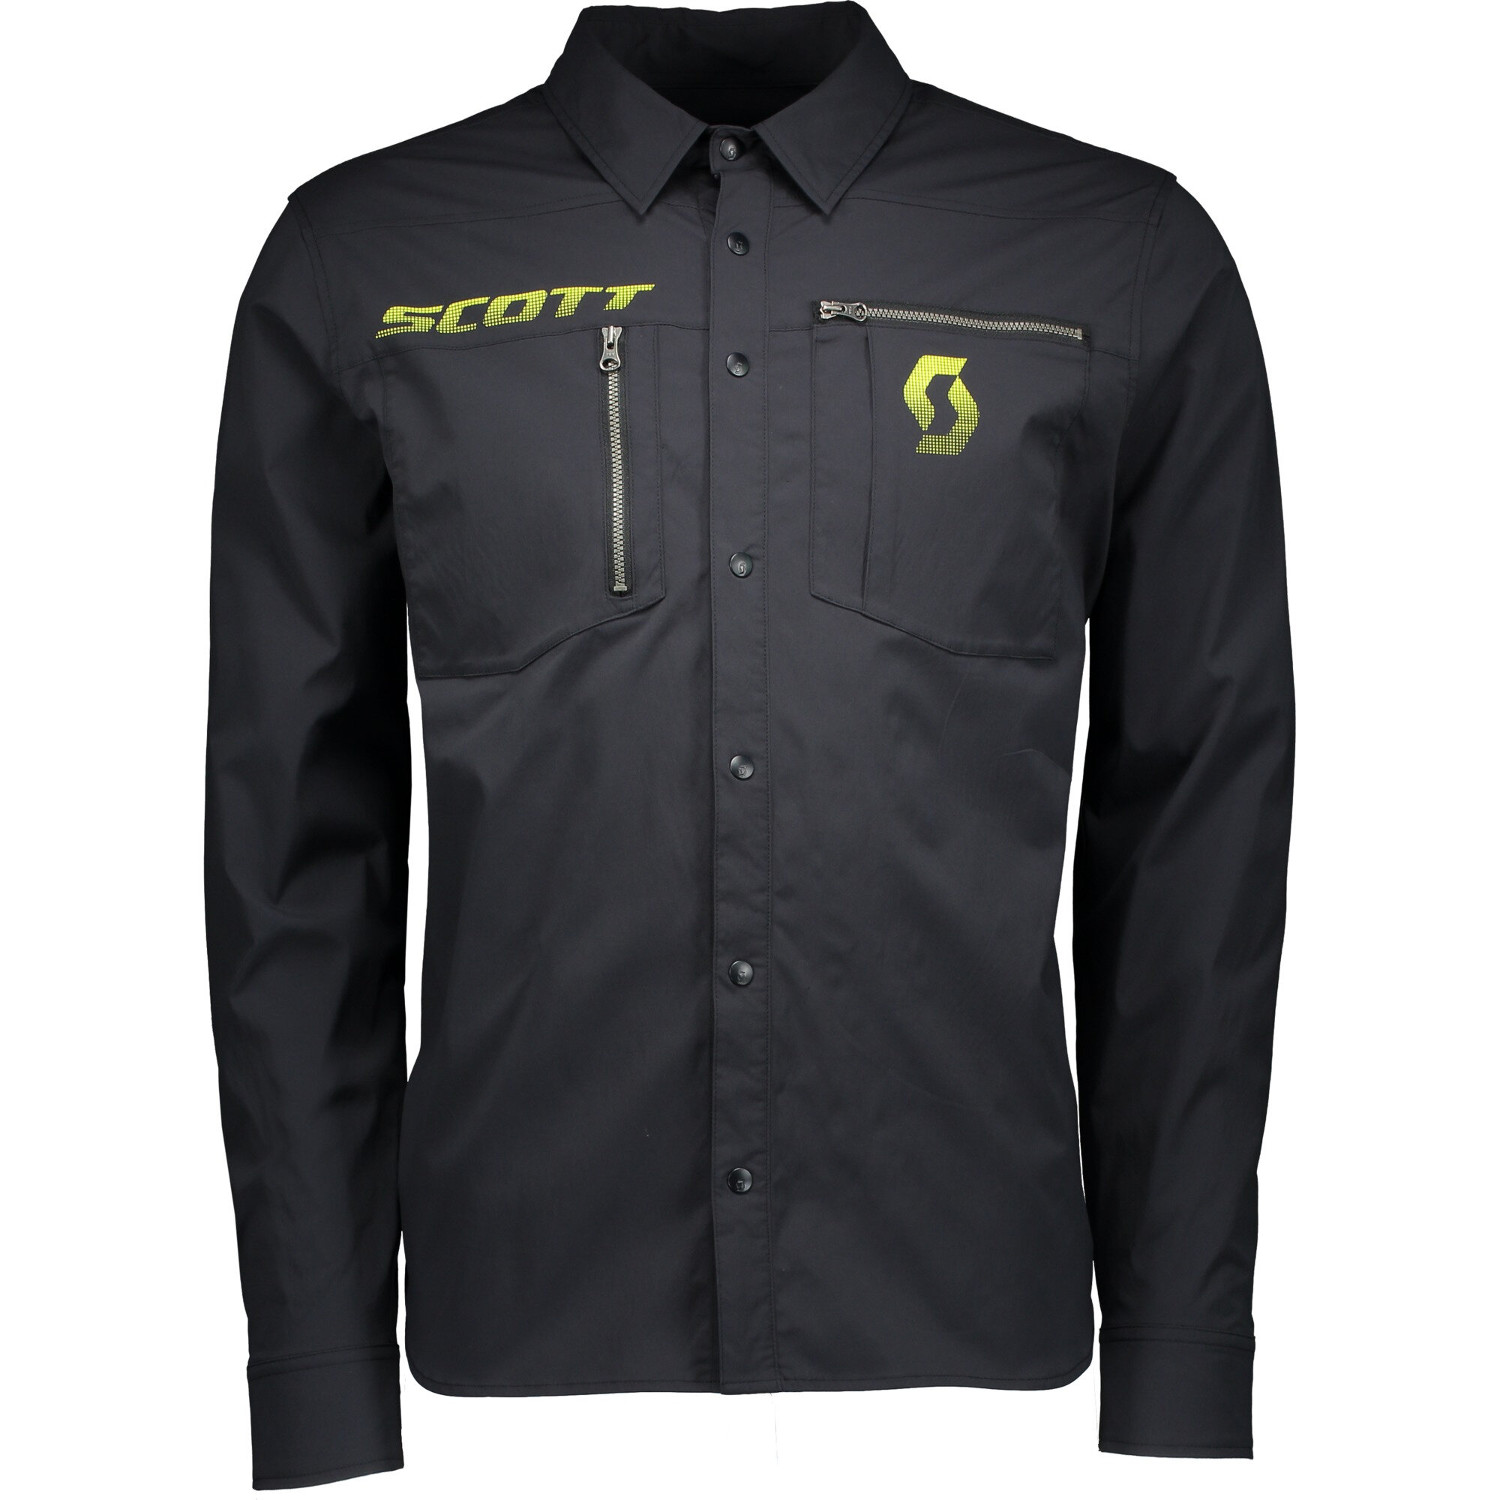 Scott Shirt Long Sleeve Factory Team Black/Sulphur Yellow